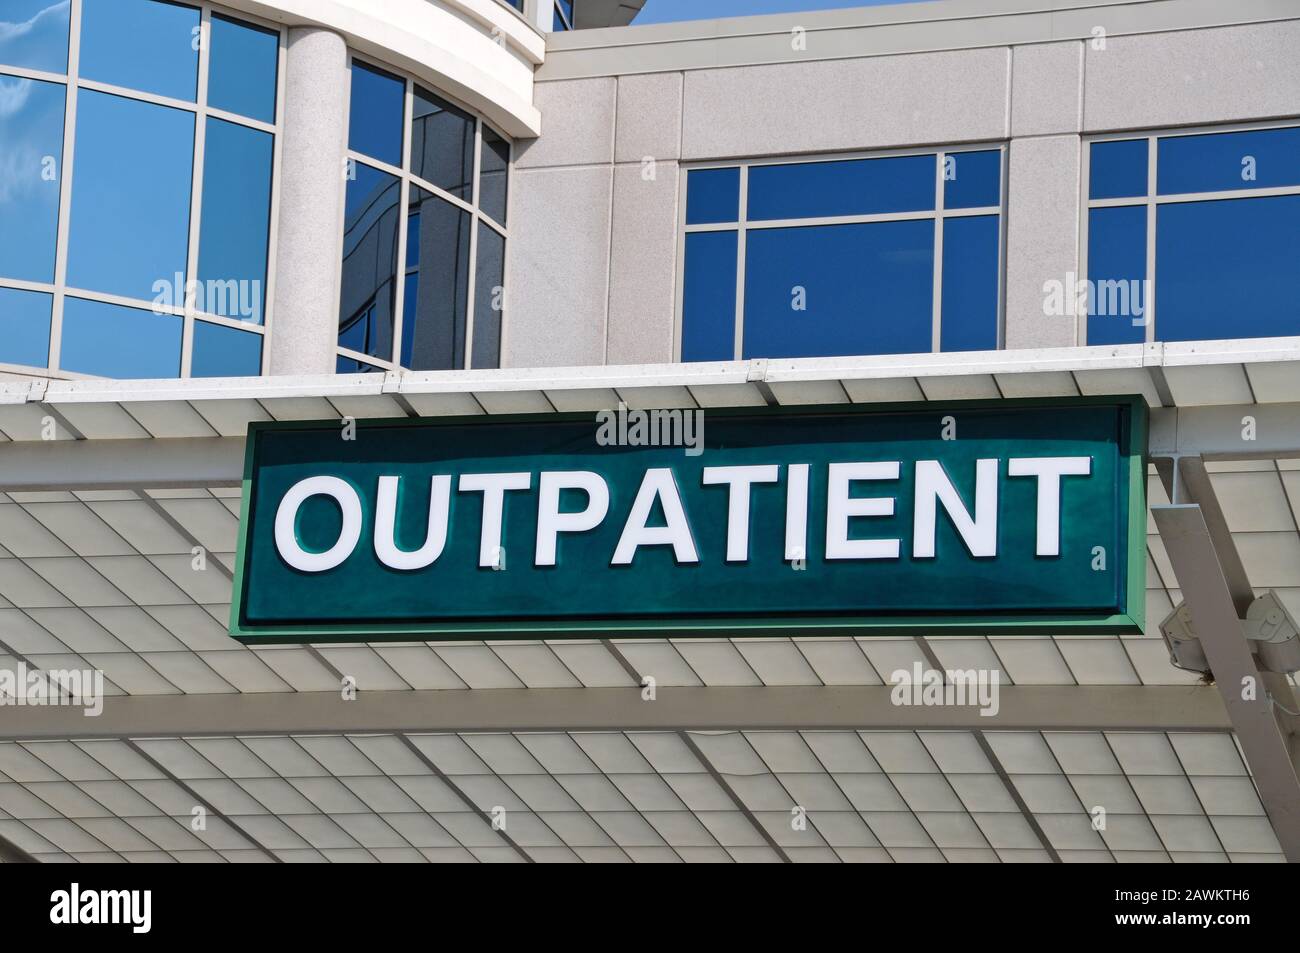 Outpatient Sign over a Hospital Outpatient Services Entrance Stock Photo